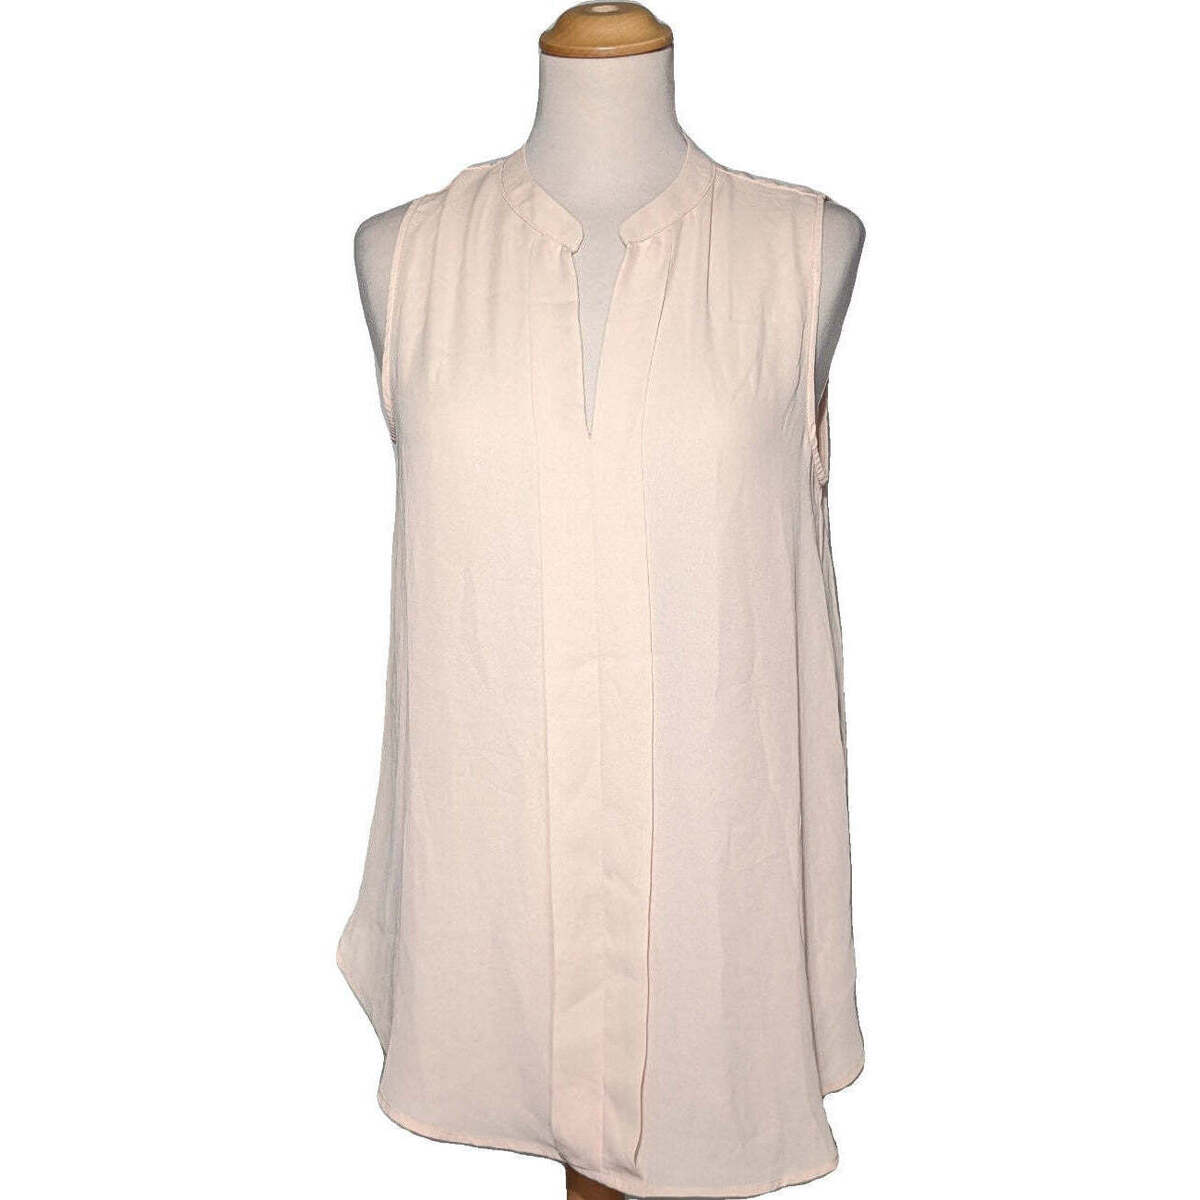 Vêtements Femme RE DONE slogan-print short-sleeve T-shirt Bianco débardeur  36 - T1 - S Rose Rose